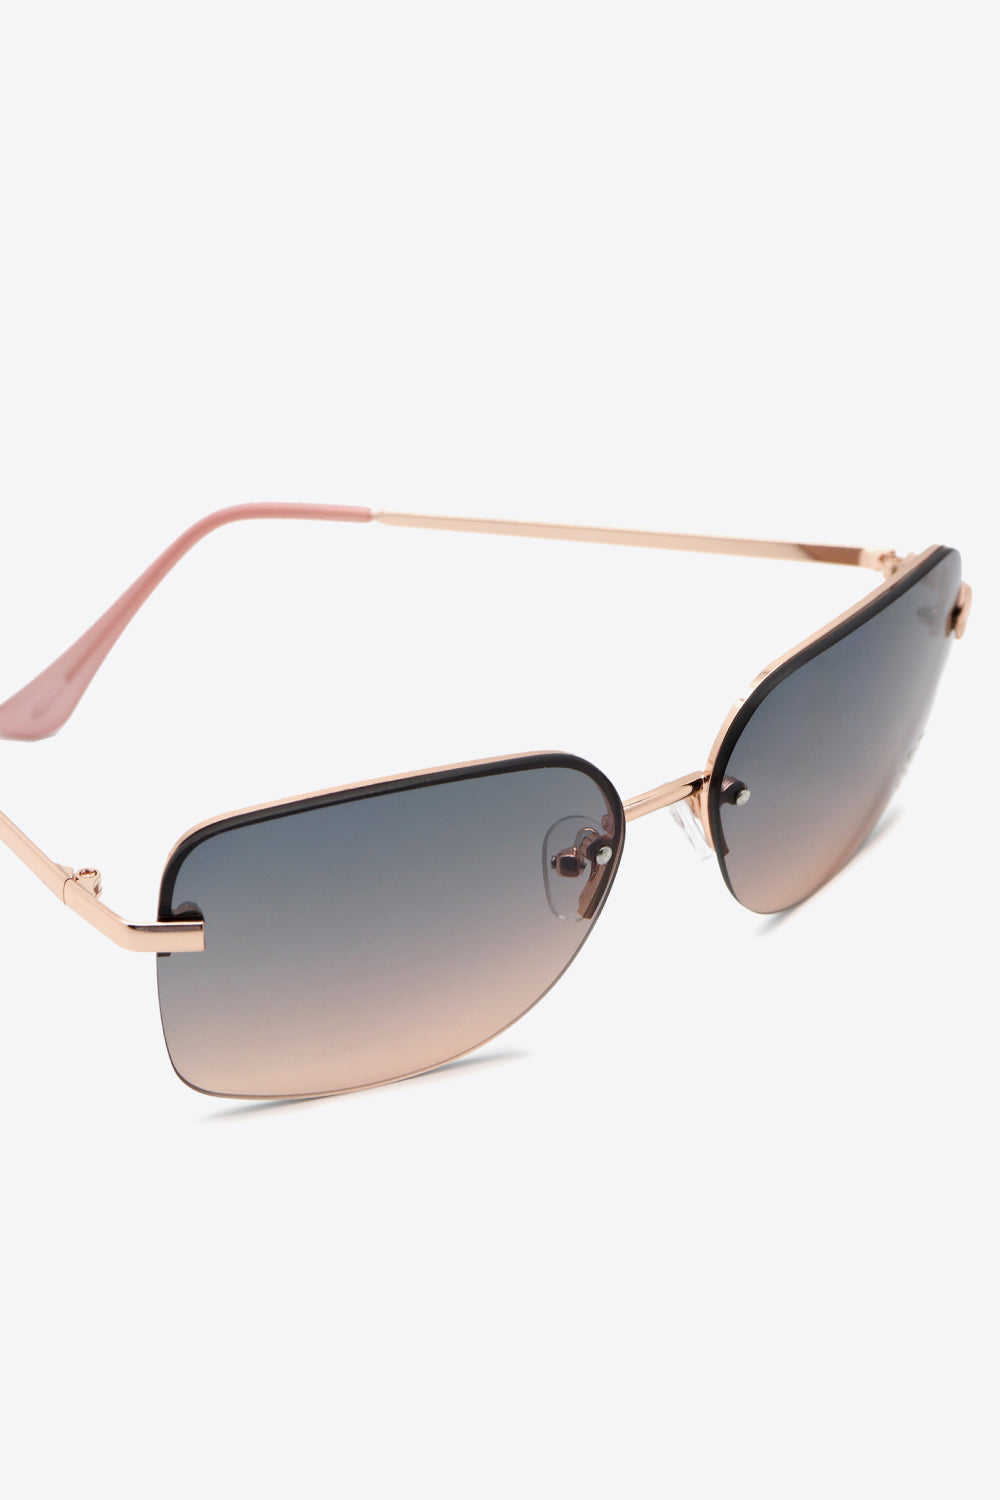 Women’s Rhinestone Heart Metal Frame Sunglasses